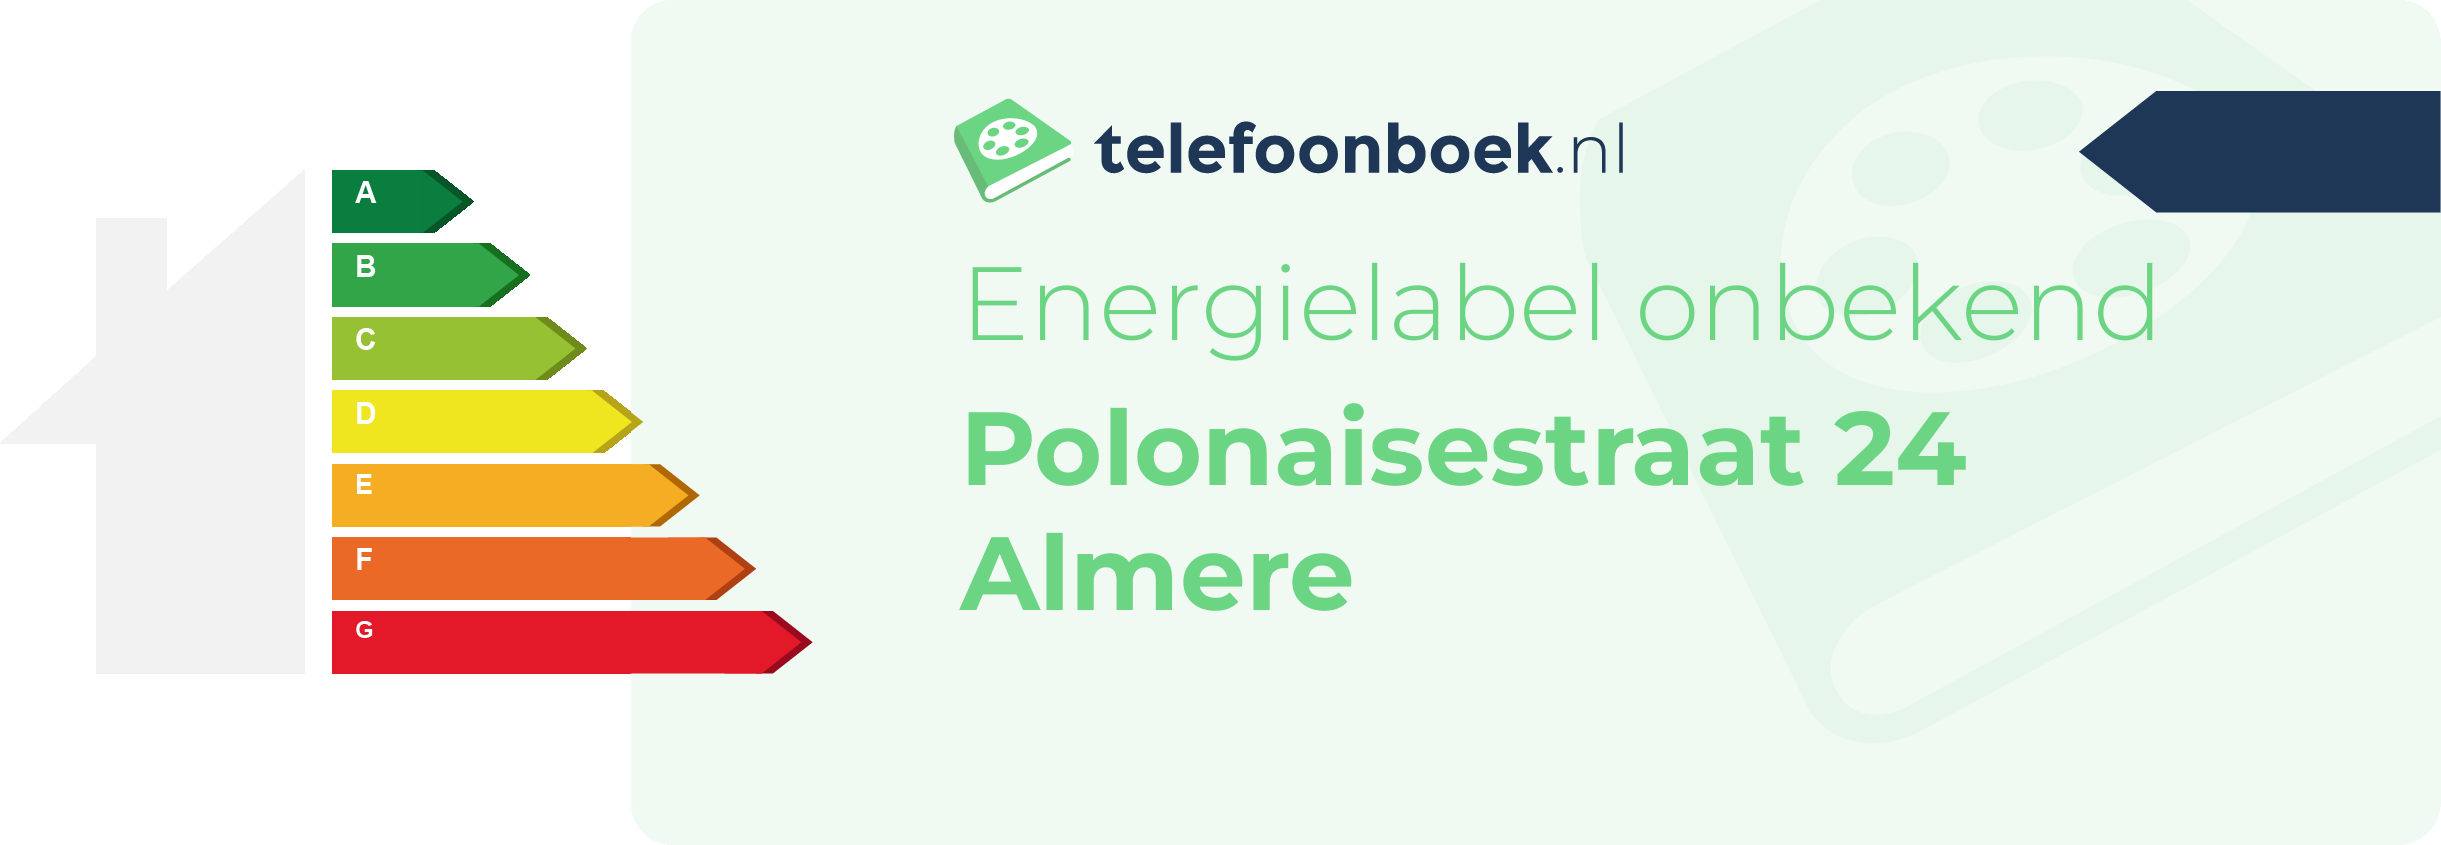 Energielabel Polonaisestraat 24 Almere